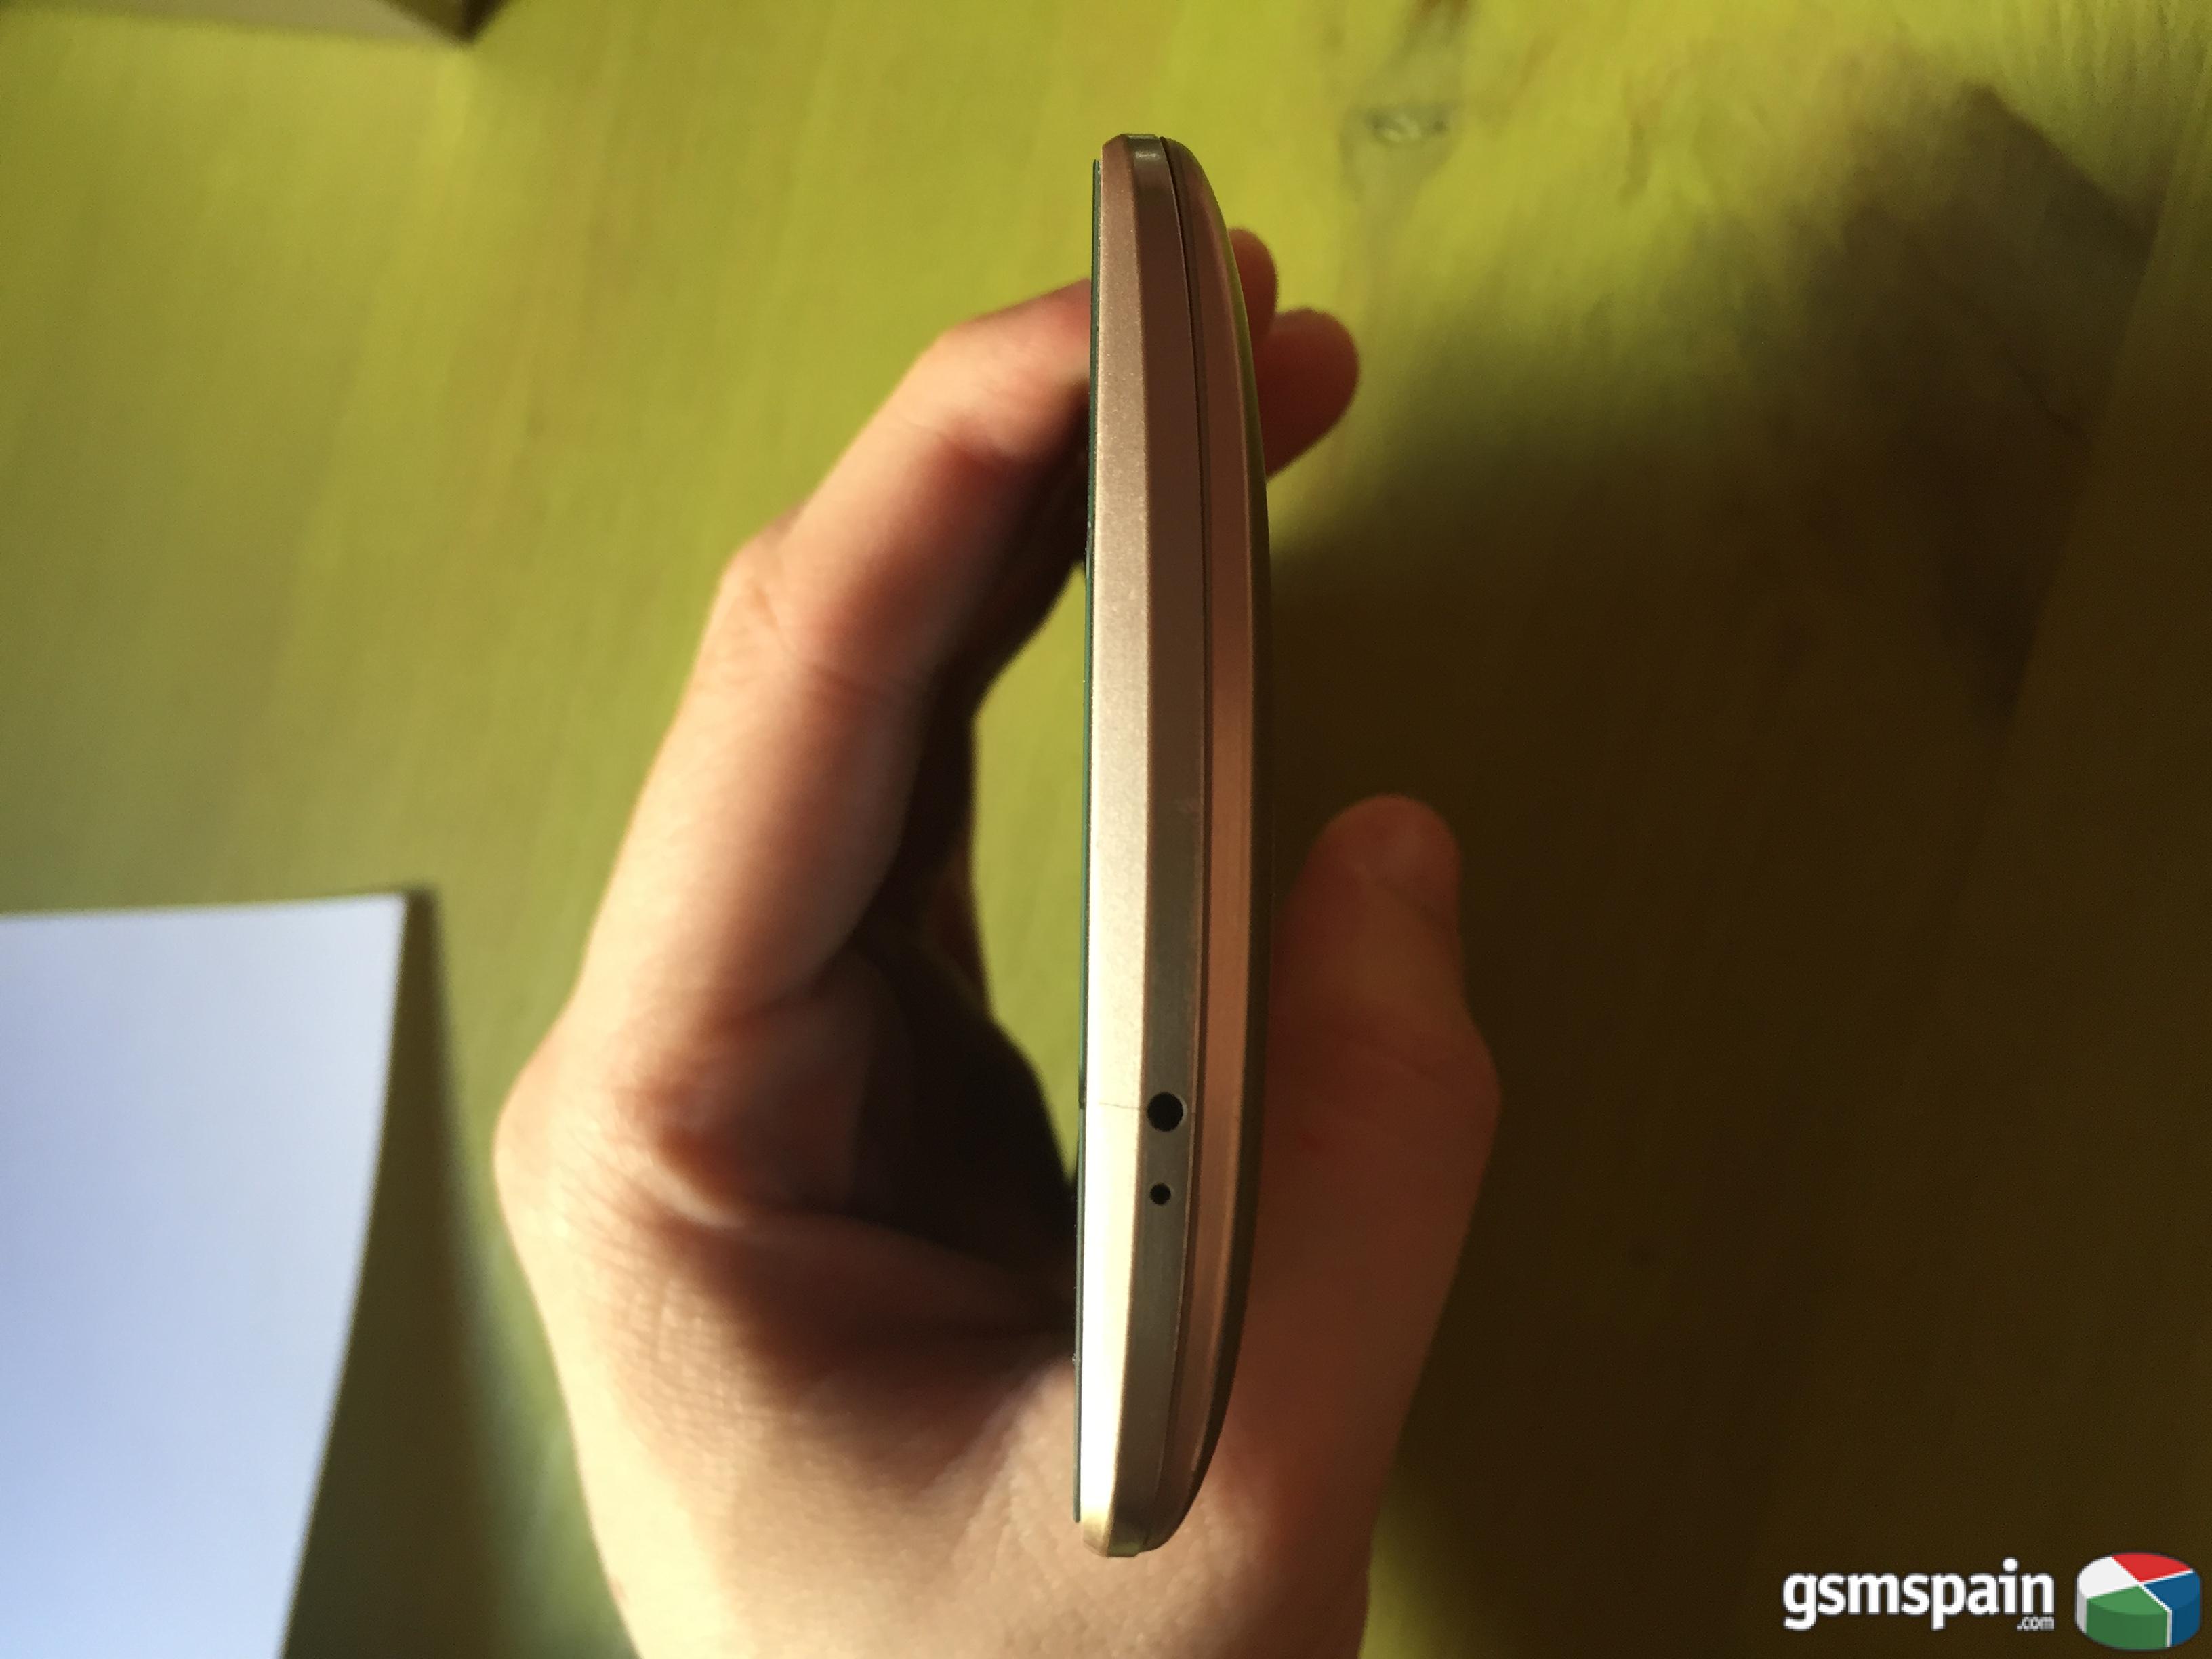 [VENDO] LG G3 + LG GWatch + Funda Quickcircle original